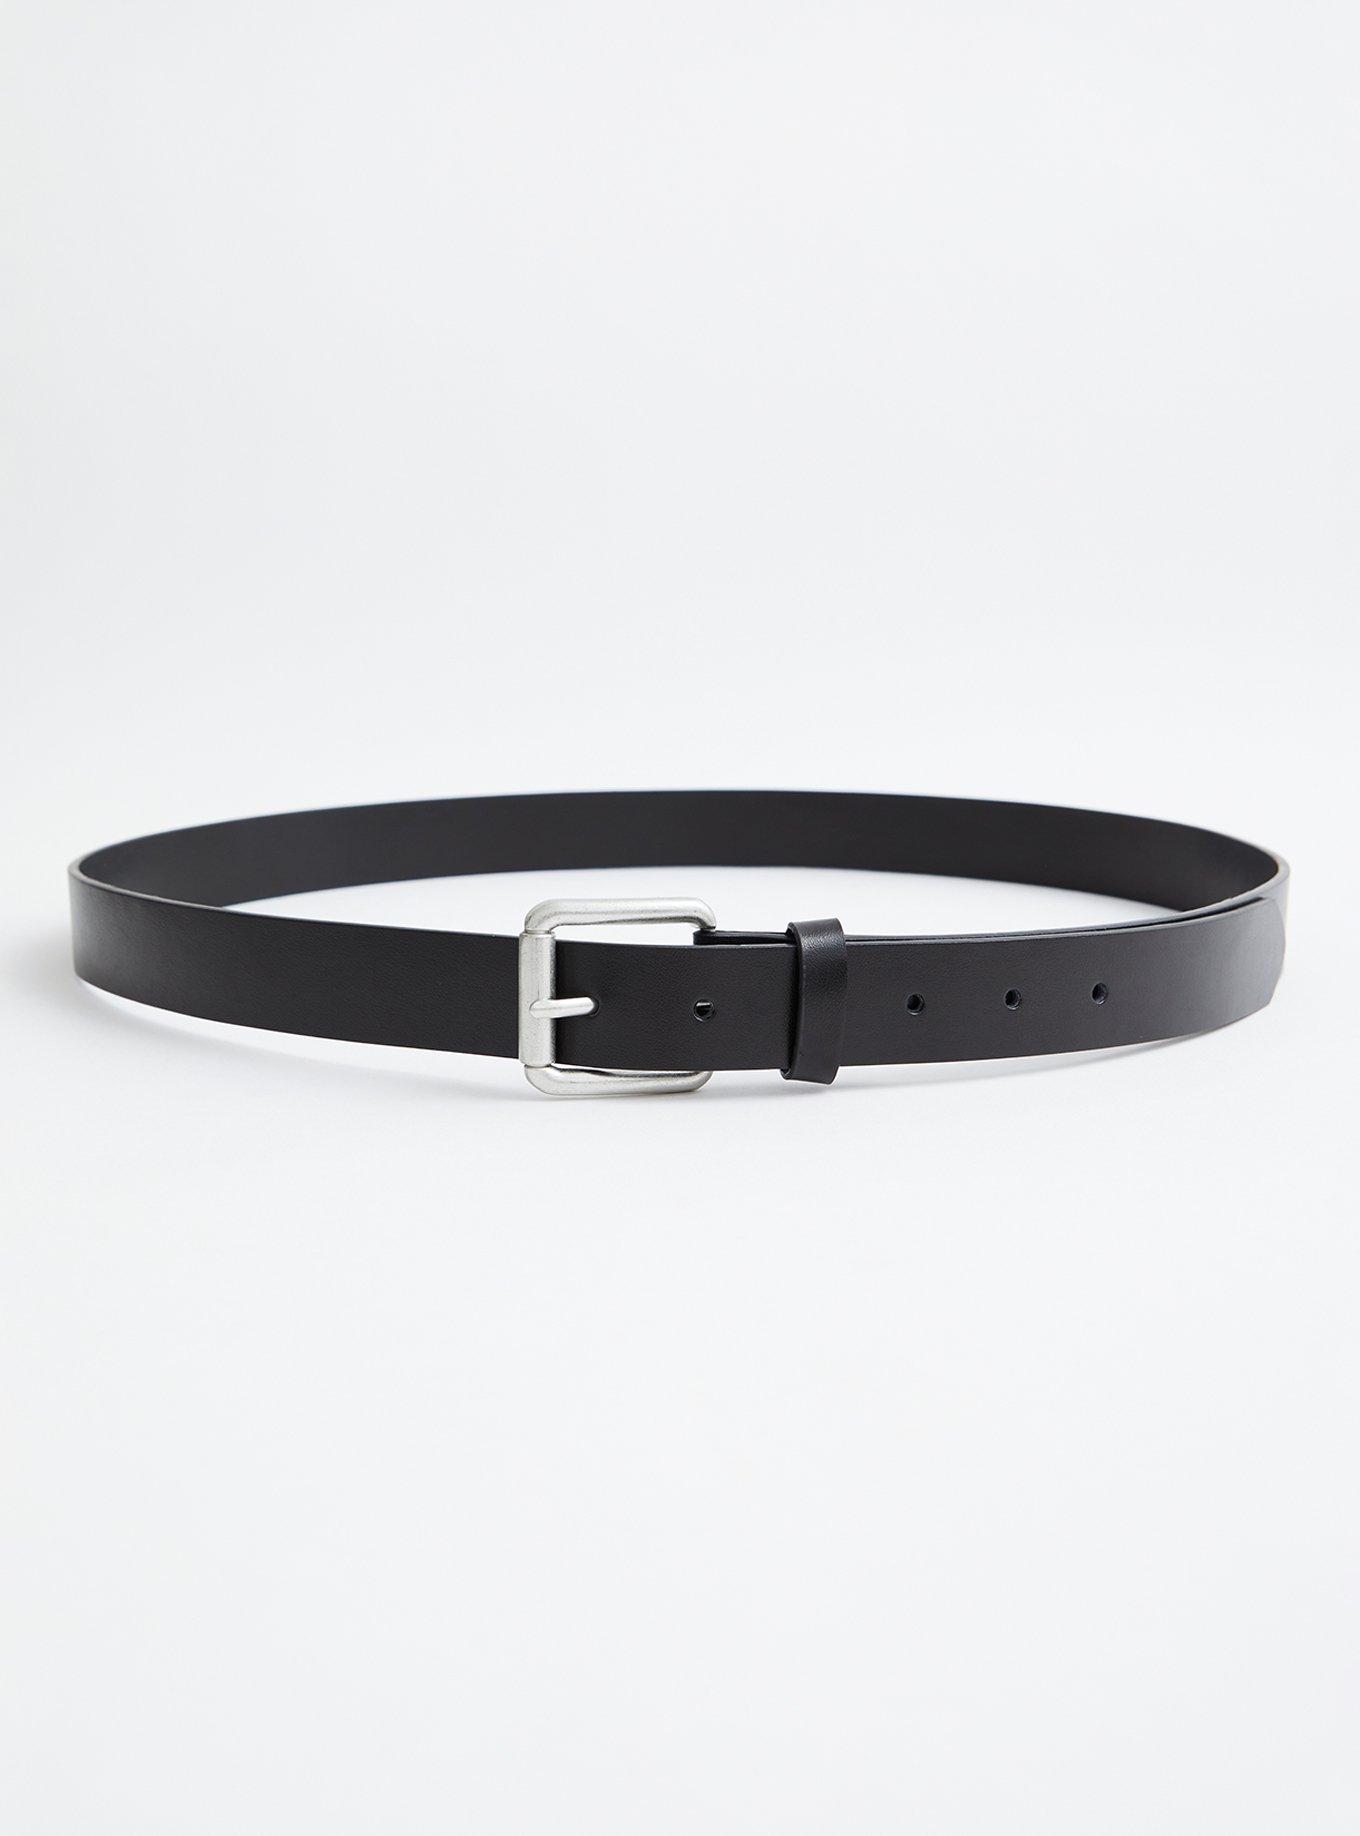 Plus Size - Leather Belt - Torrid